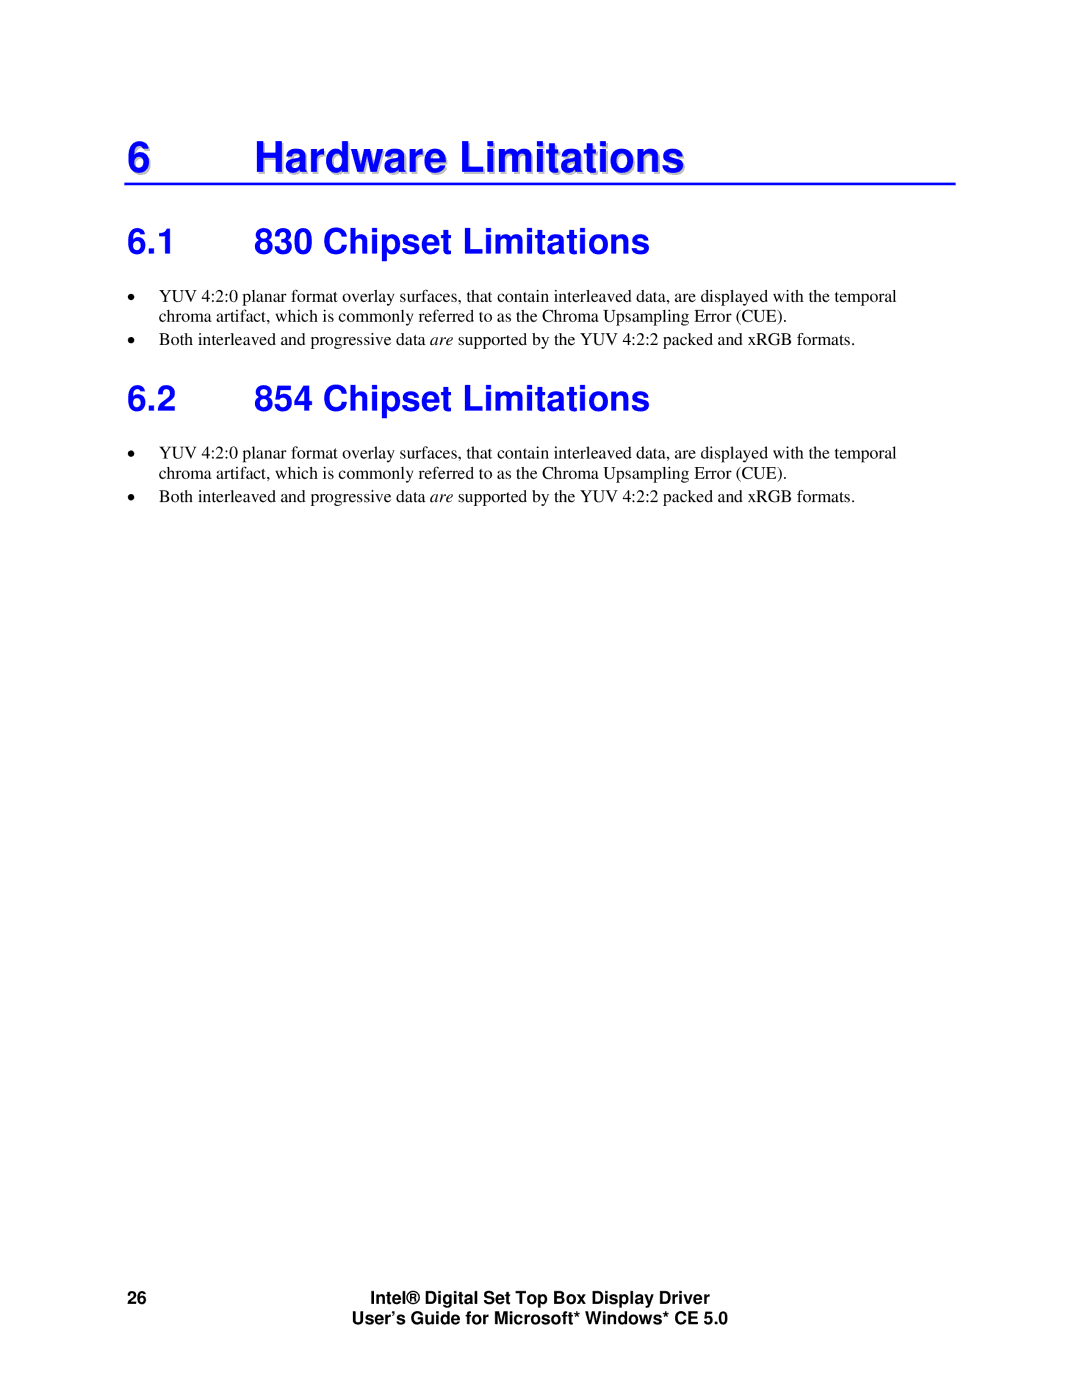 Intel 82830M GMCH, 82854 GMCH manual Hardware Limitations, Chipset Limitations 